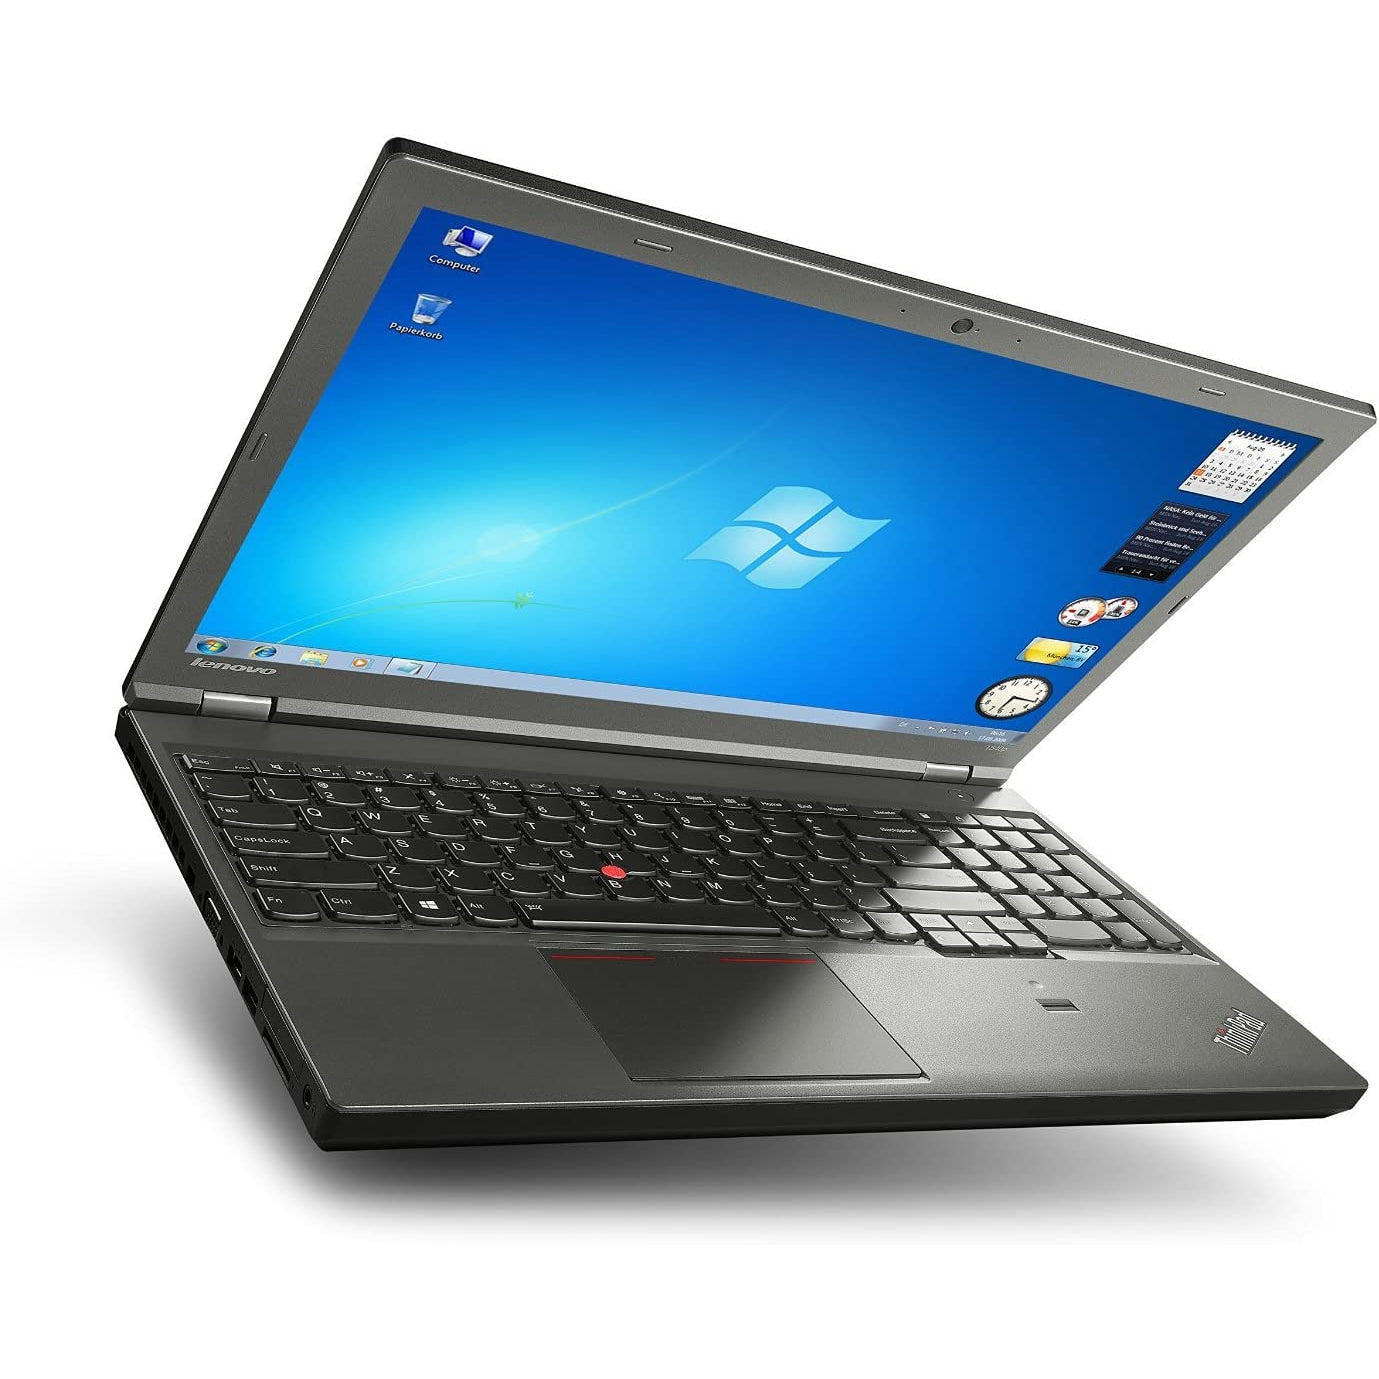 Lenovo ThinkPad T540p Laptop PC 15.6", Core i5-4200M, 4GB 320GB HDD, Black